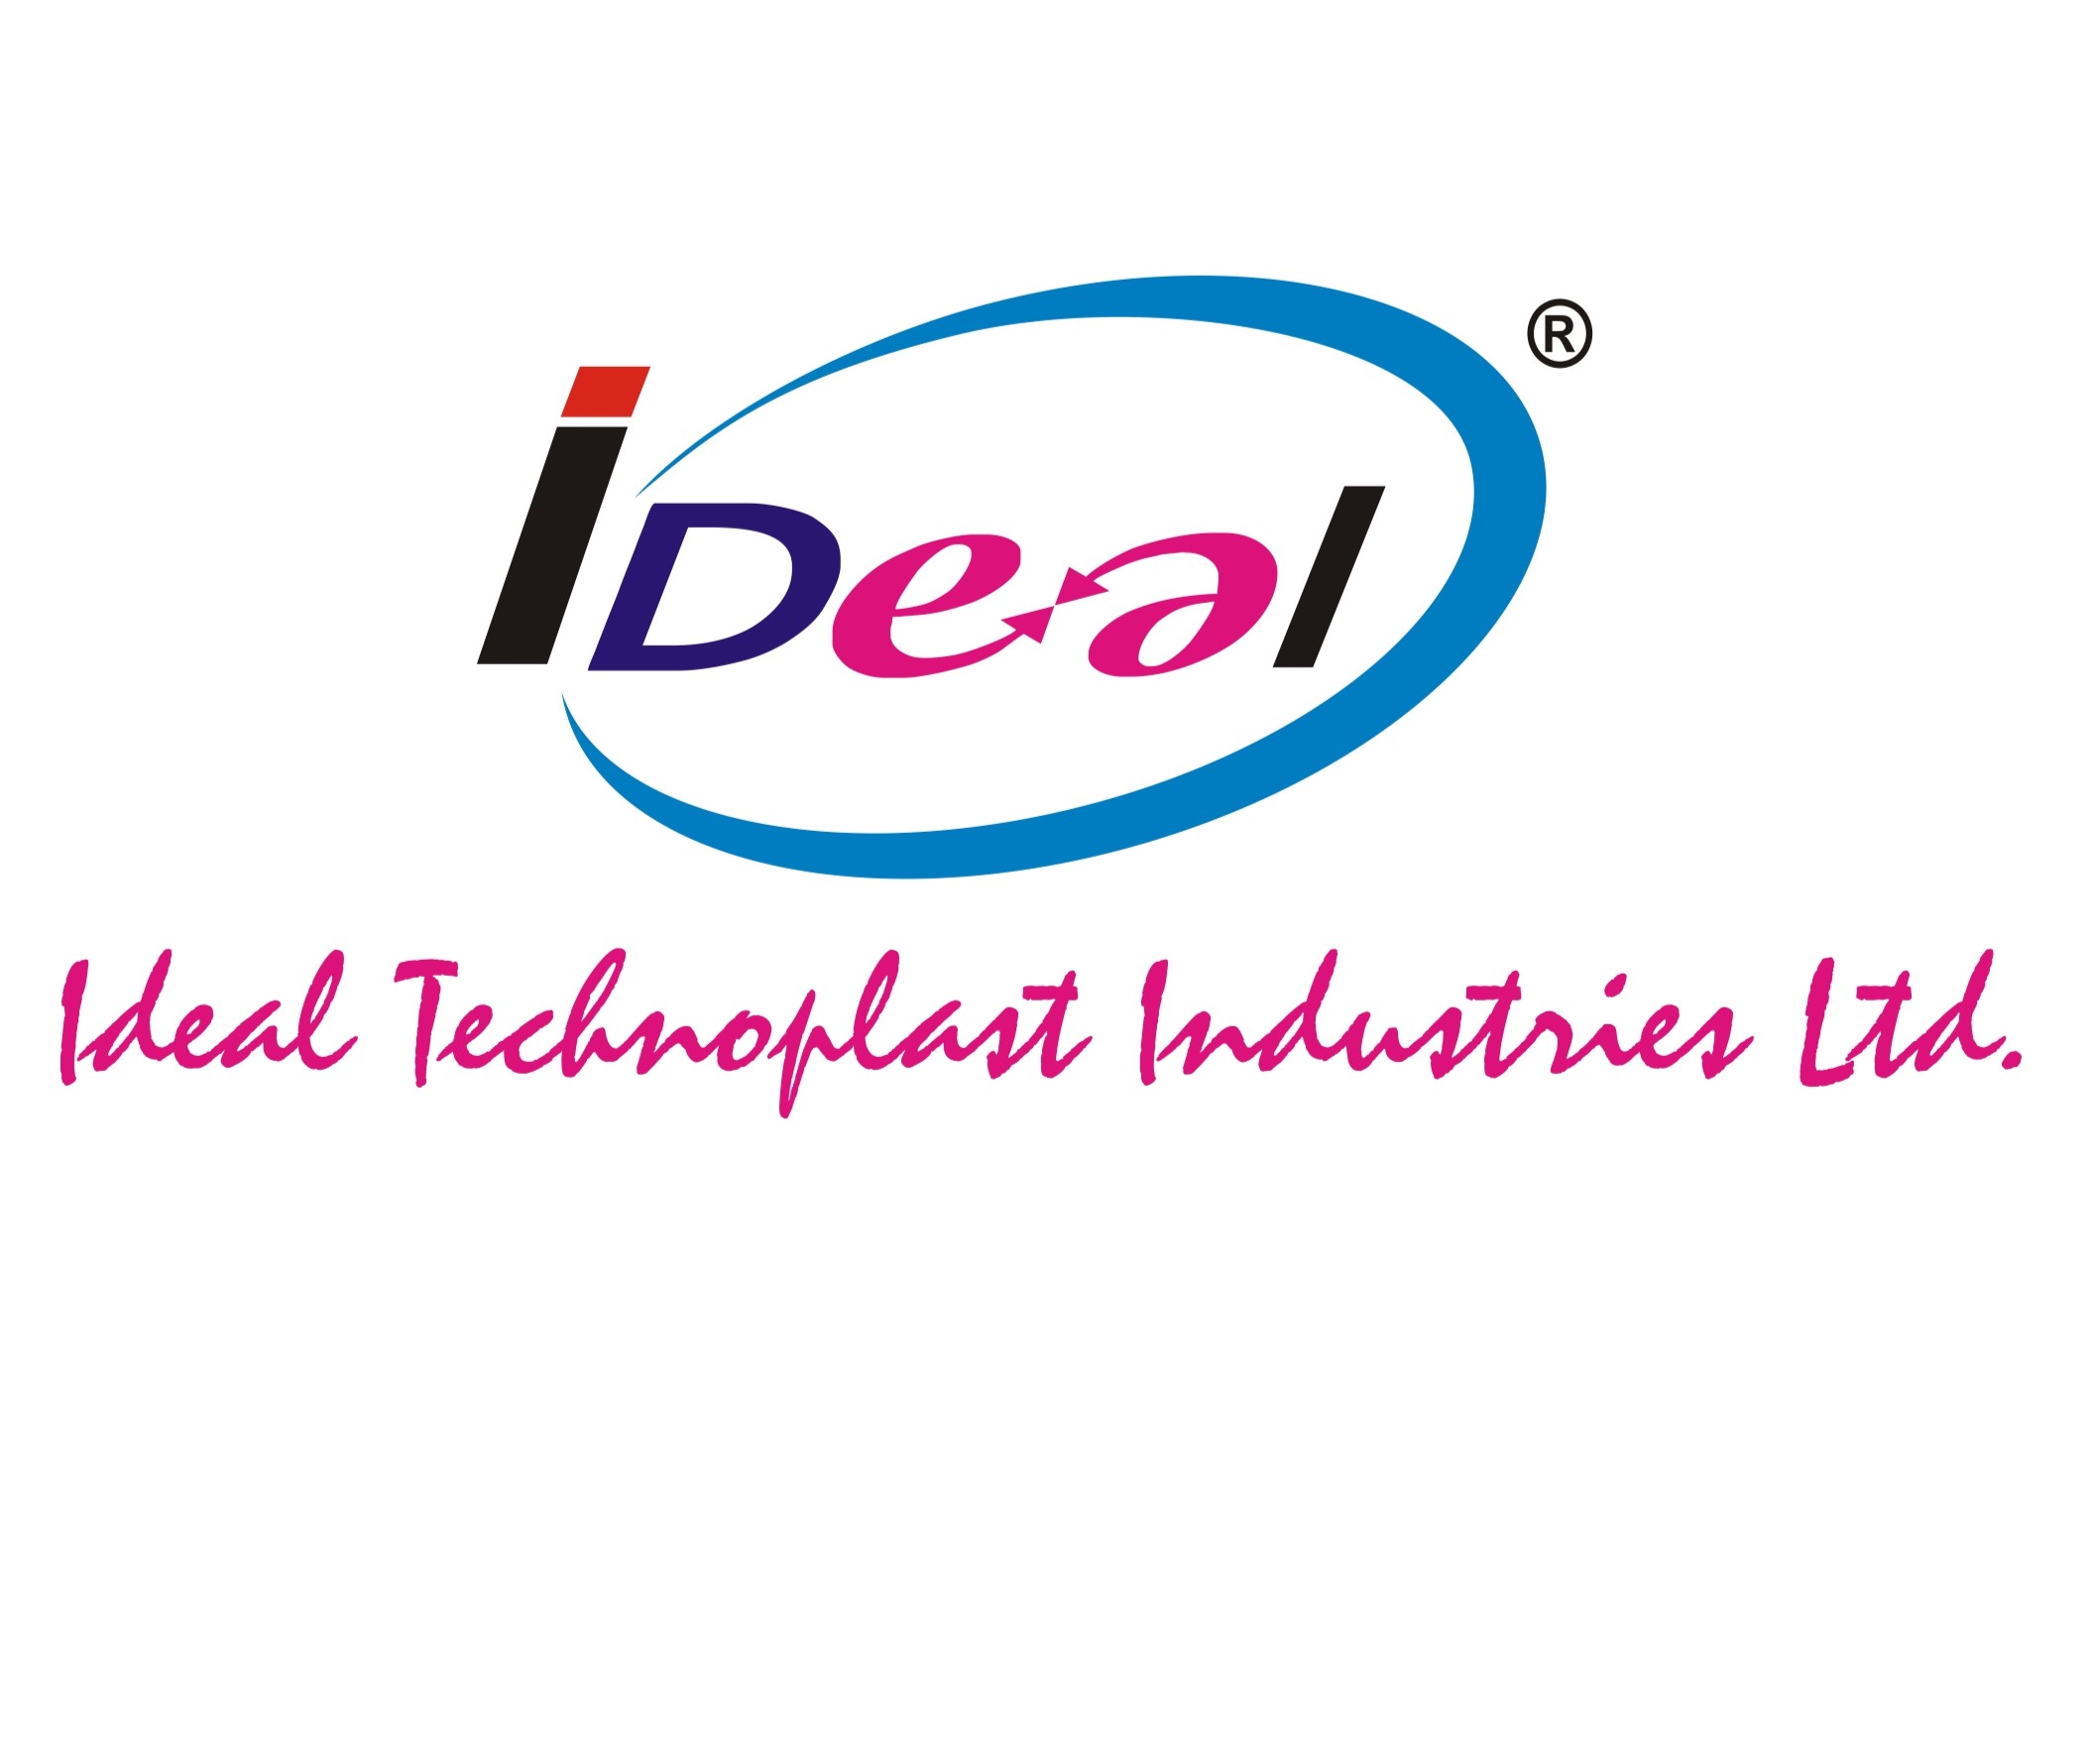 Ideal technoplast industries limited